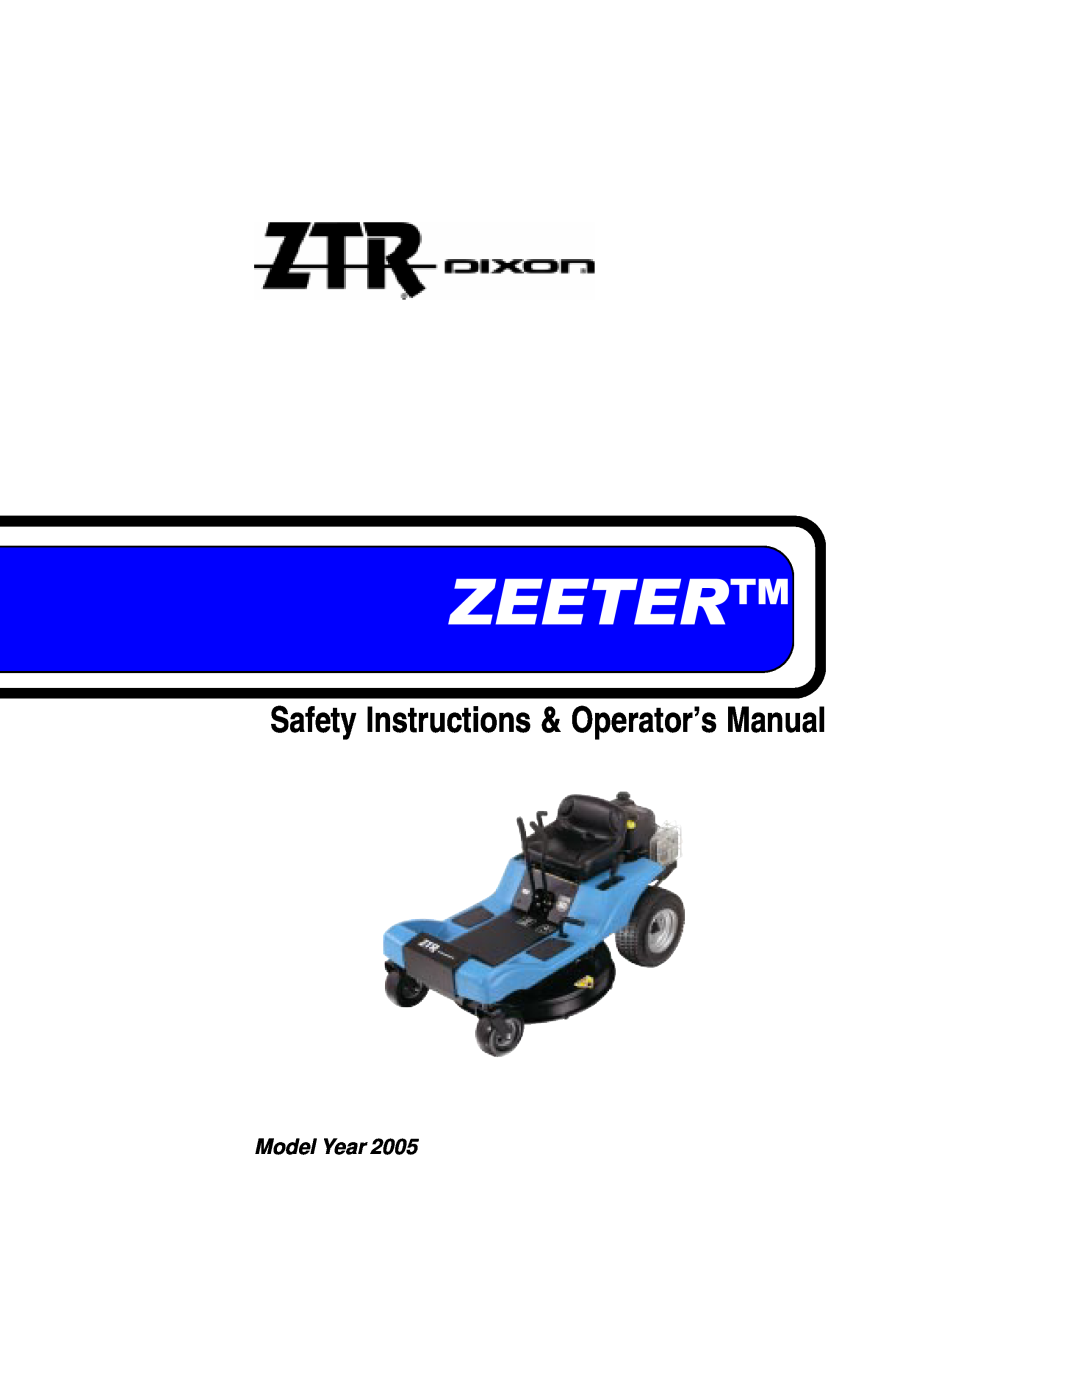 Dixon 14295-0804 manual Zeeter, Safety Instructions & Operator’s Manual 